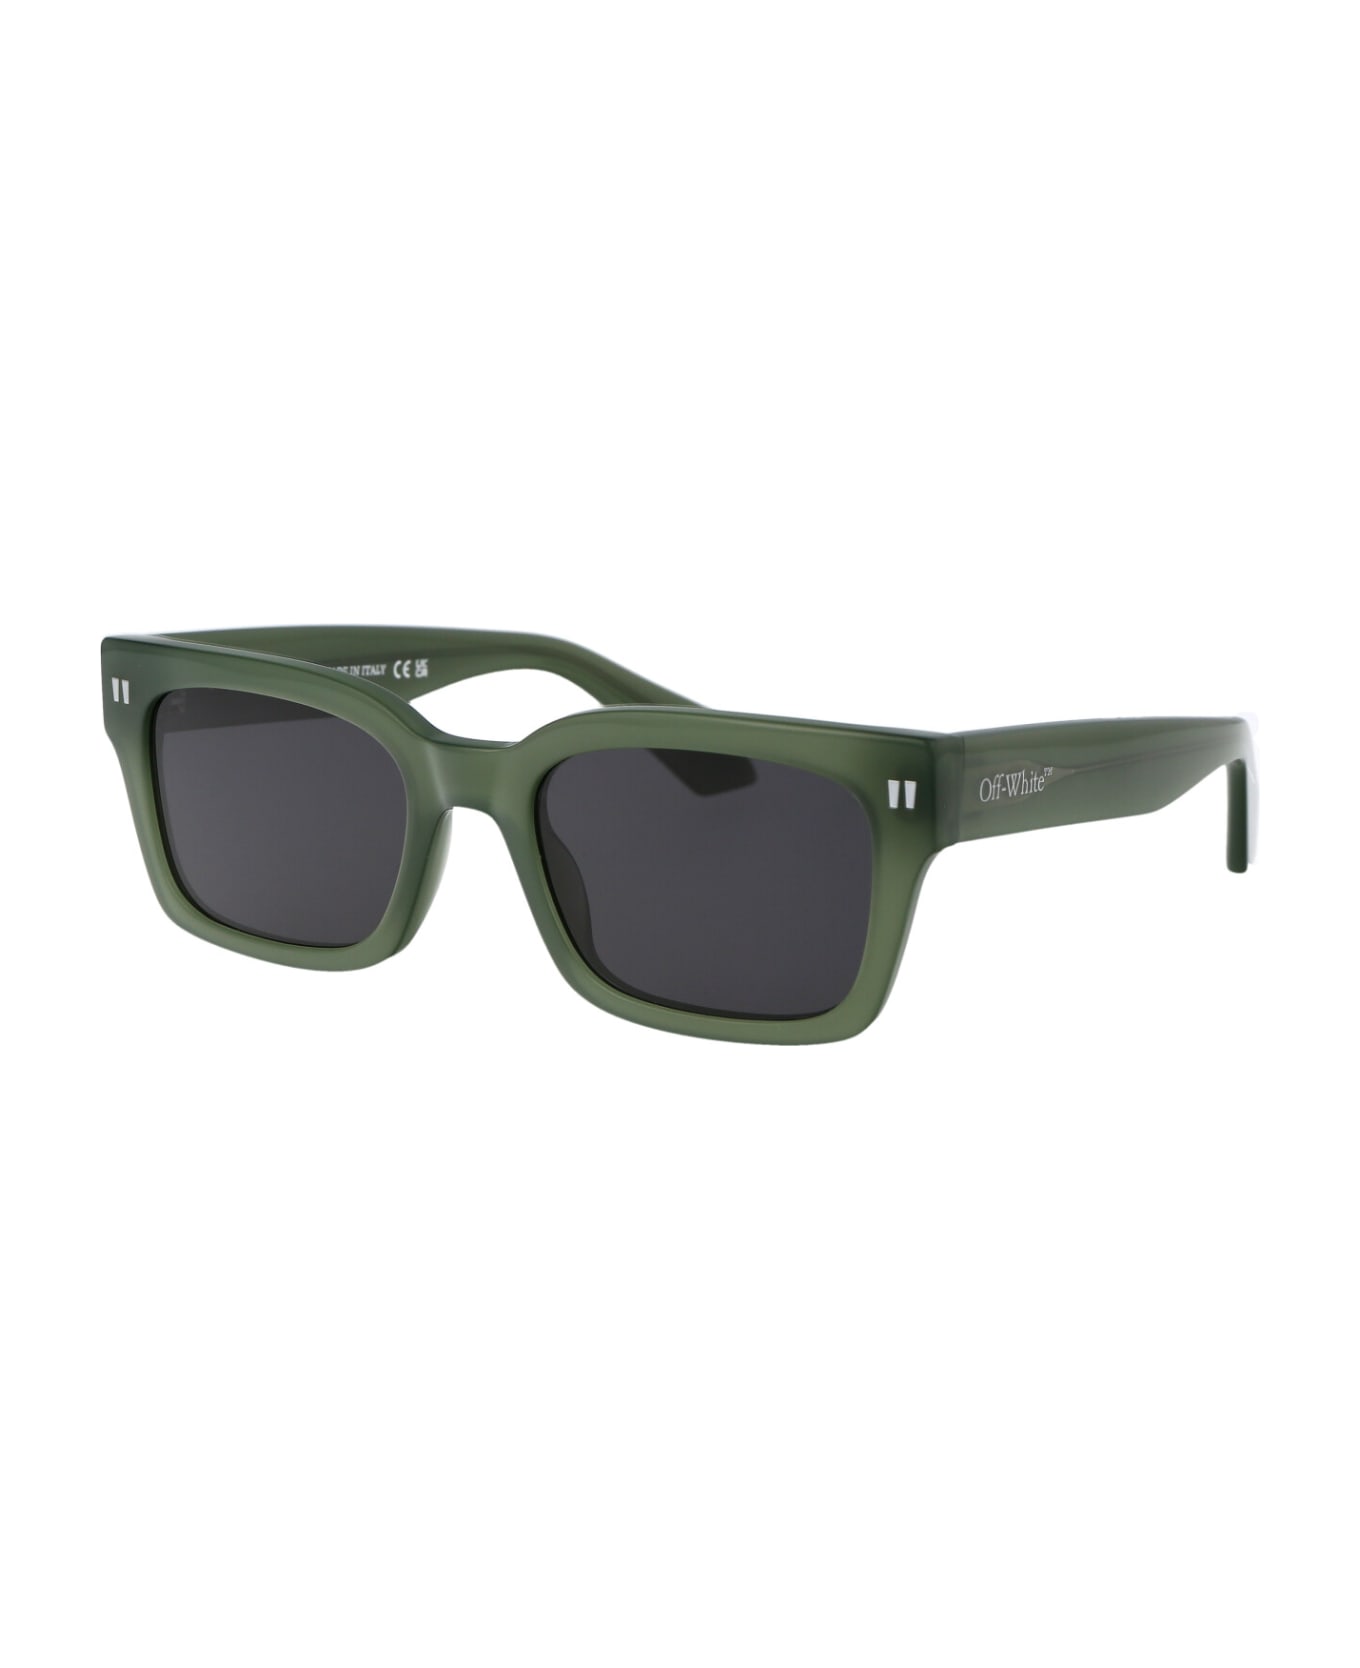 Off-White Midland Sunglasses - 5707 SAGE GREEN